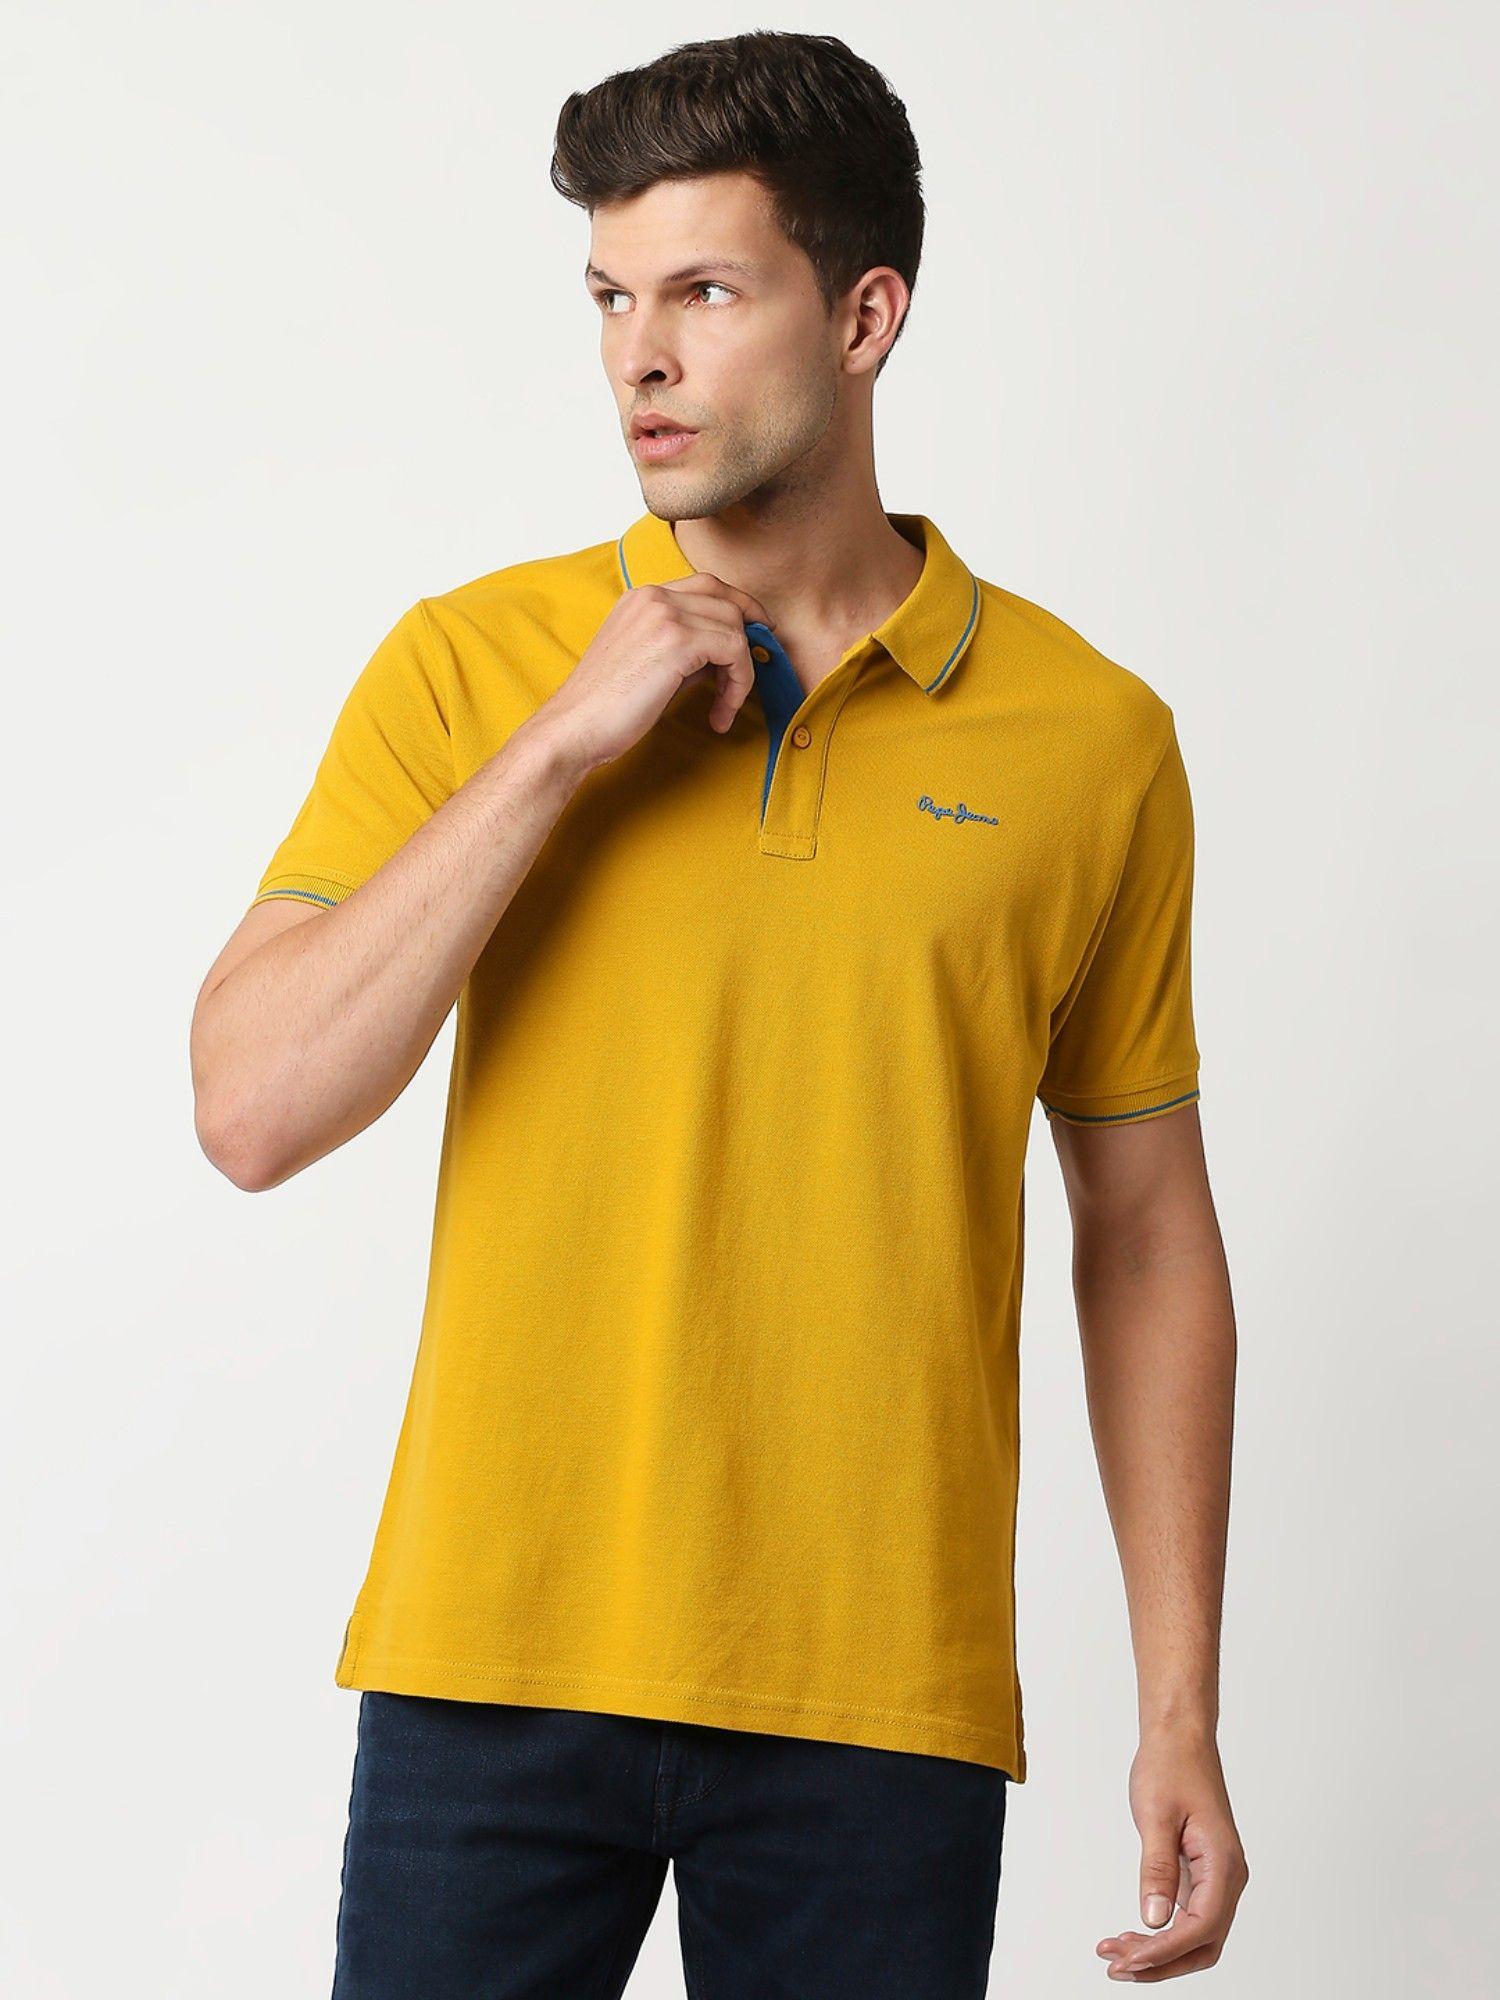 starman solid yellow polo t-shirt